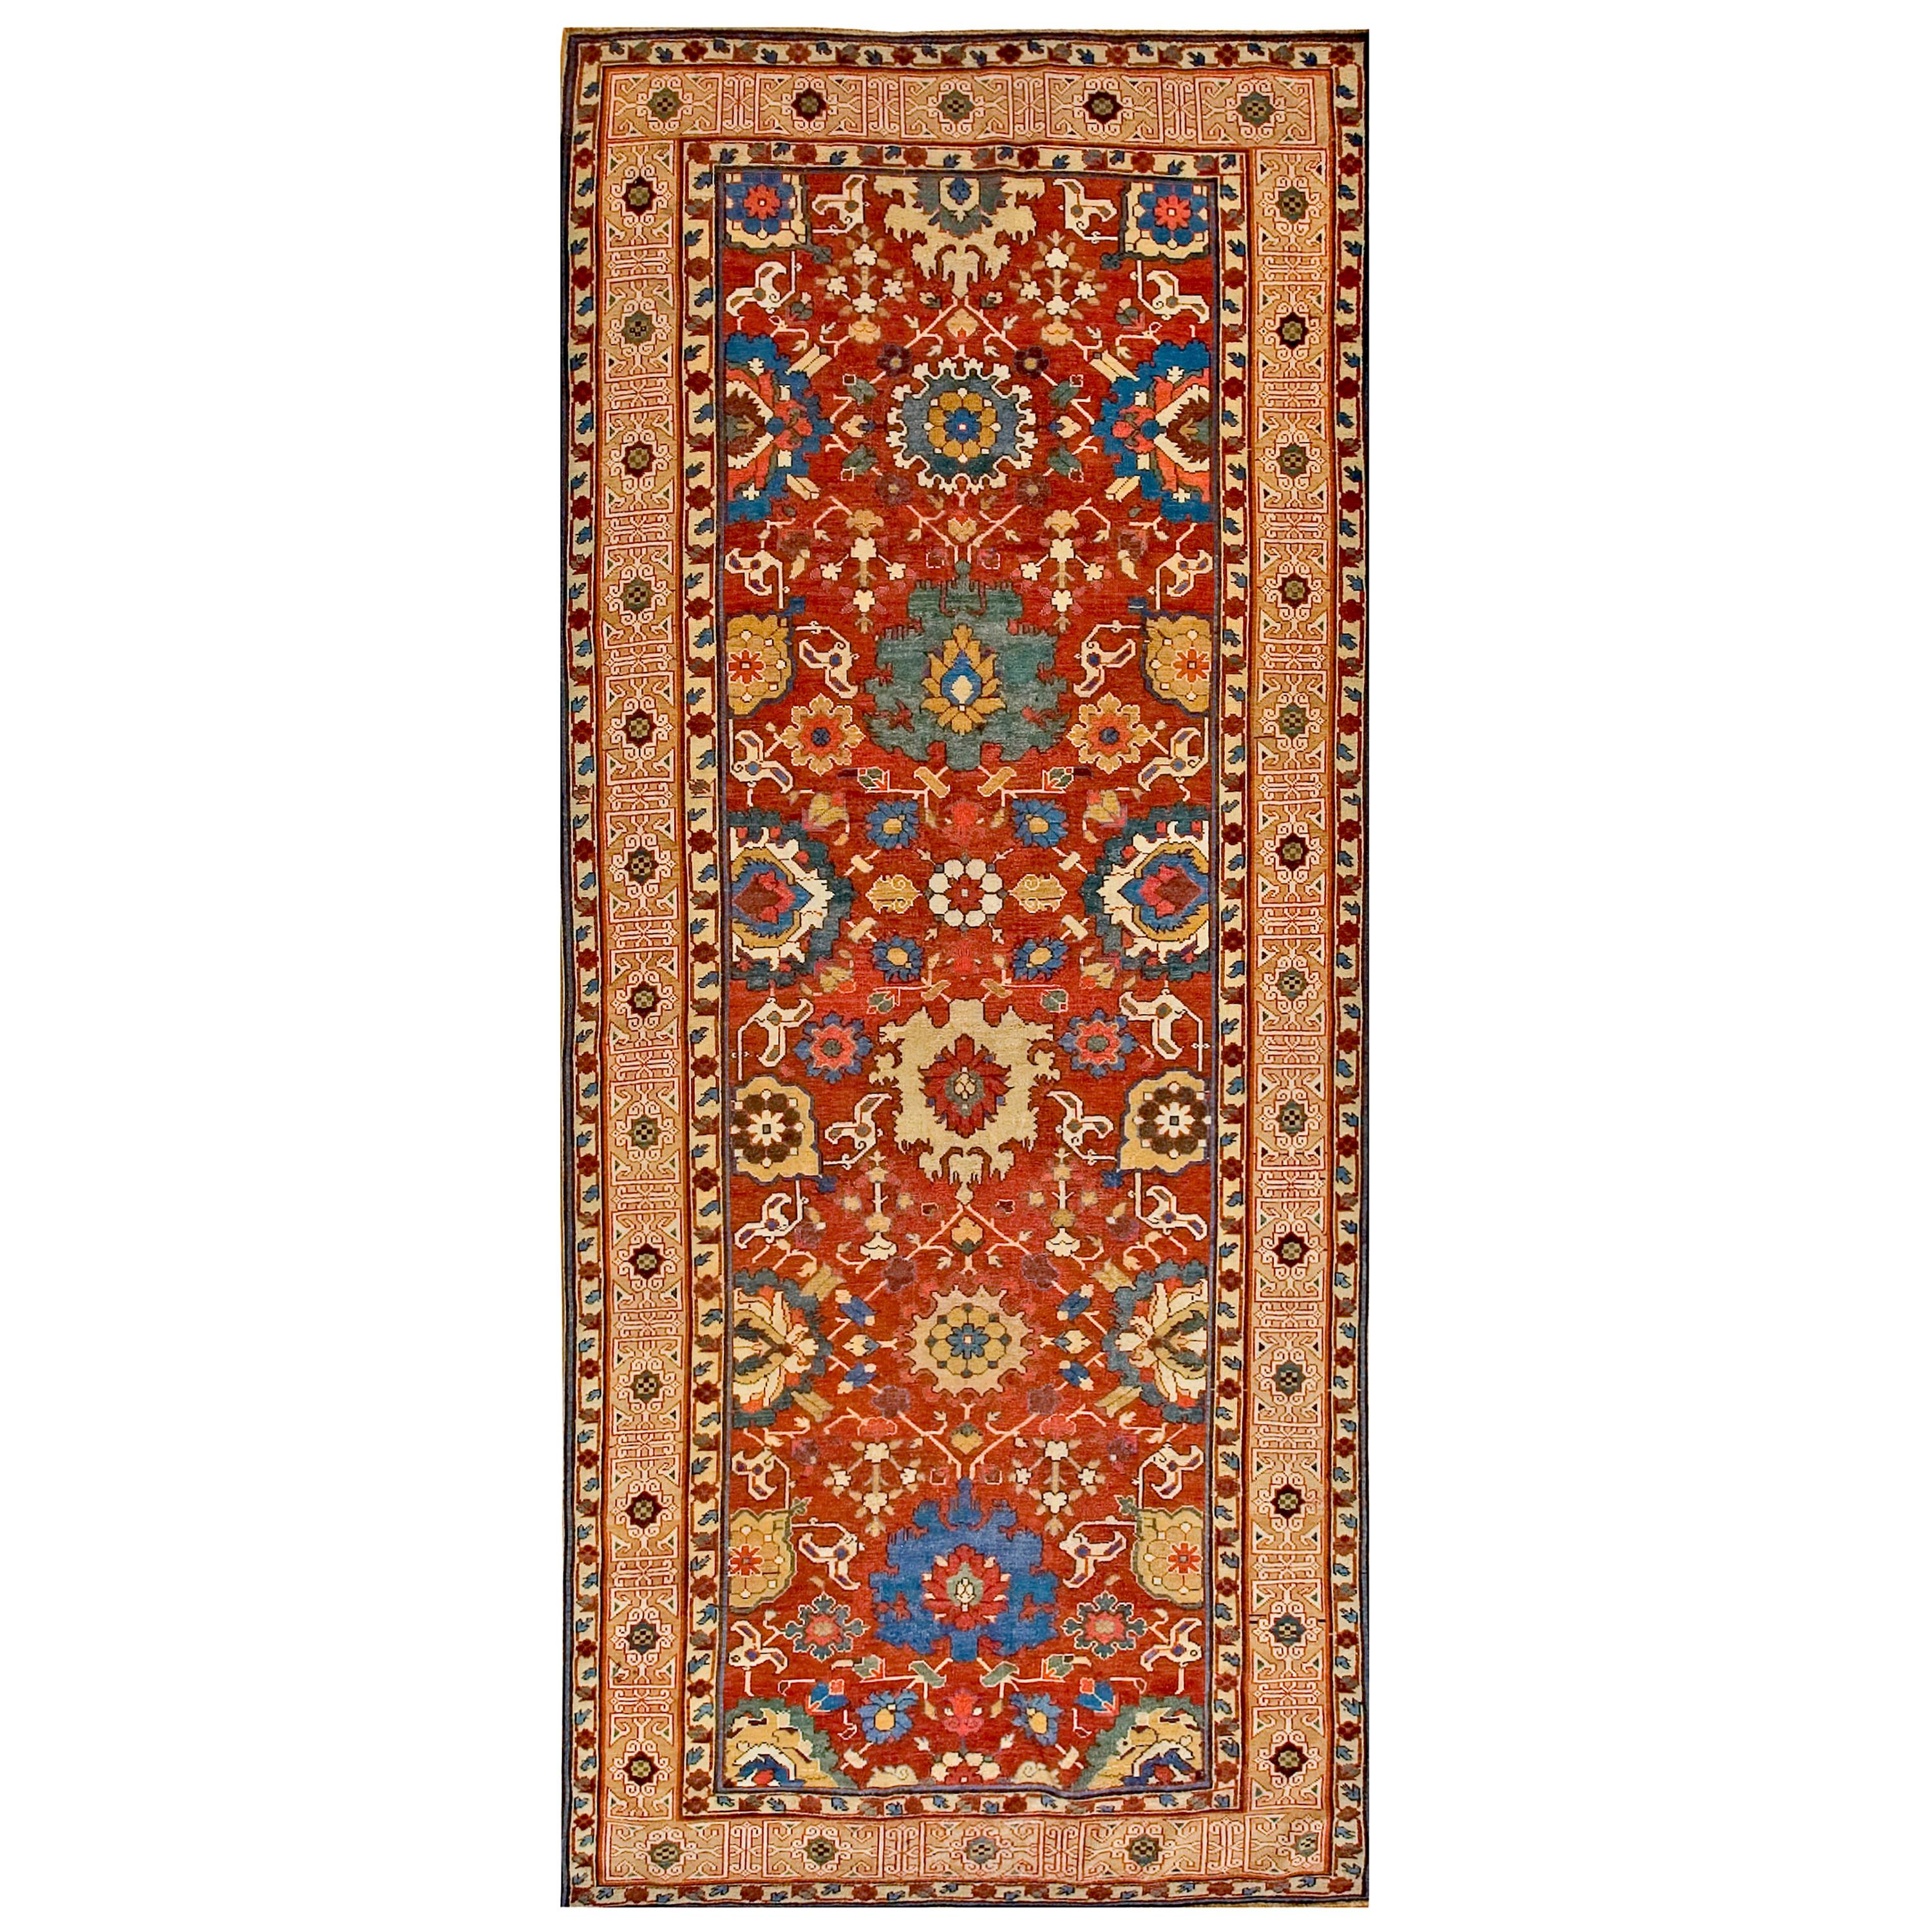 Early 19th Century Caucasian Harshang Kuba Carpet ( 4'10" x 11'10" - 147 x 361 )